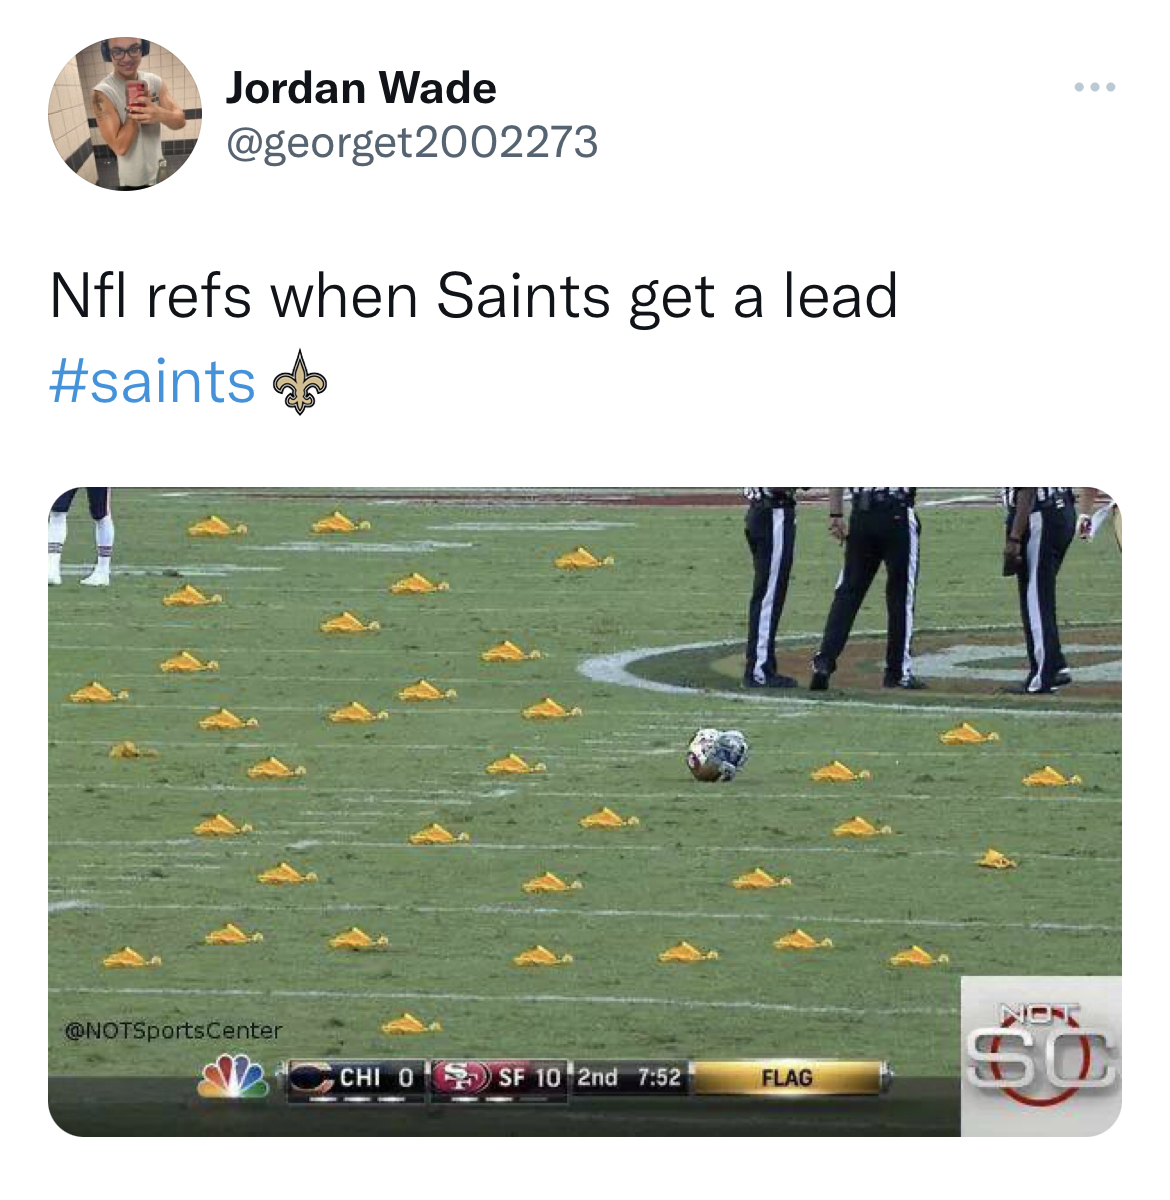 nfl memes - grass - Jordan Wade Nfl refs when Saints get a lead NOTSportsCenter Chi 0 Sf 10 2nd Flag Sc